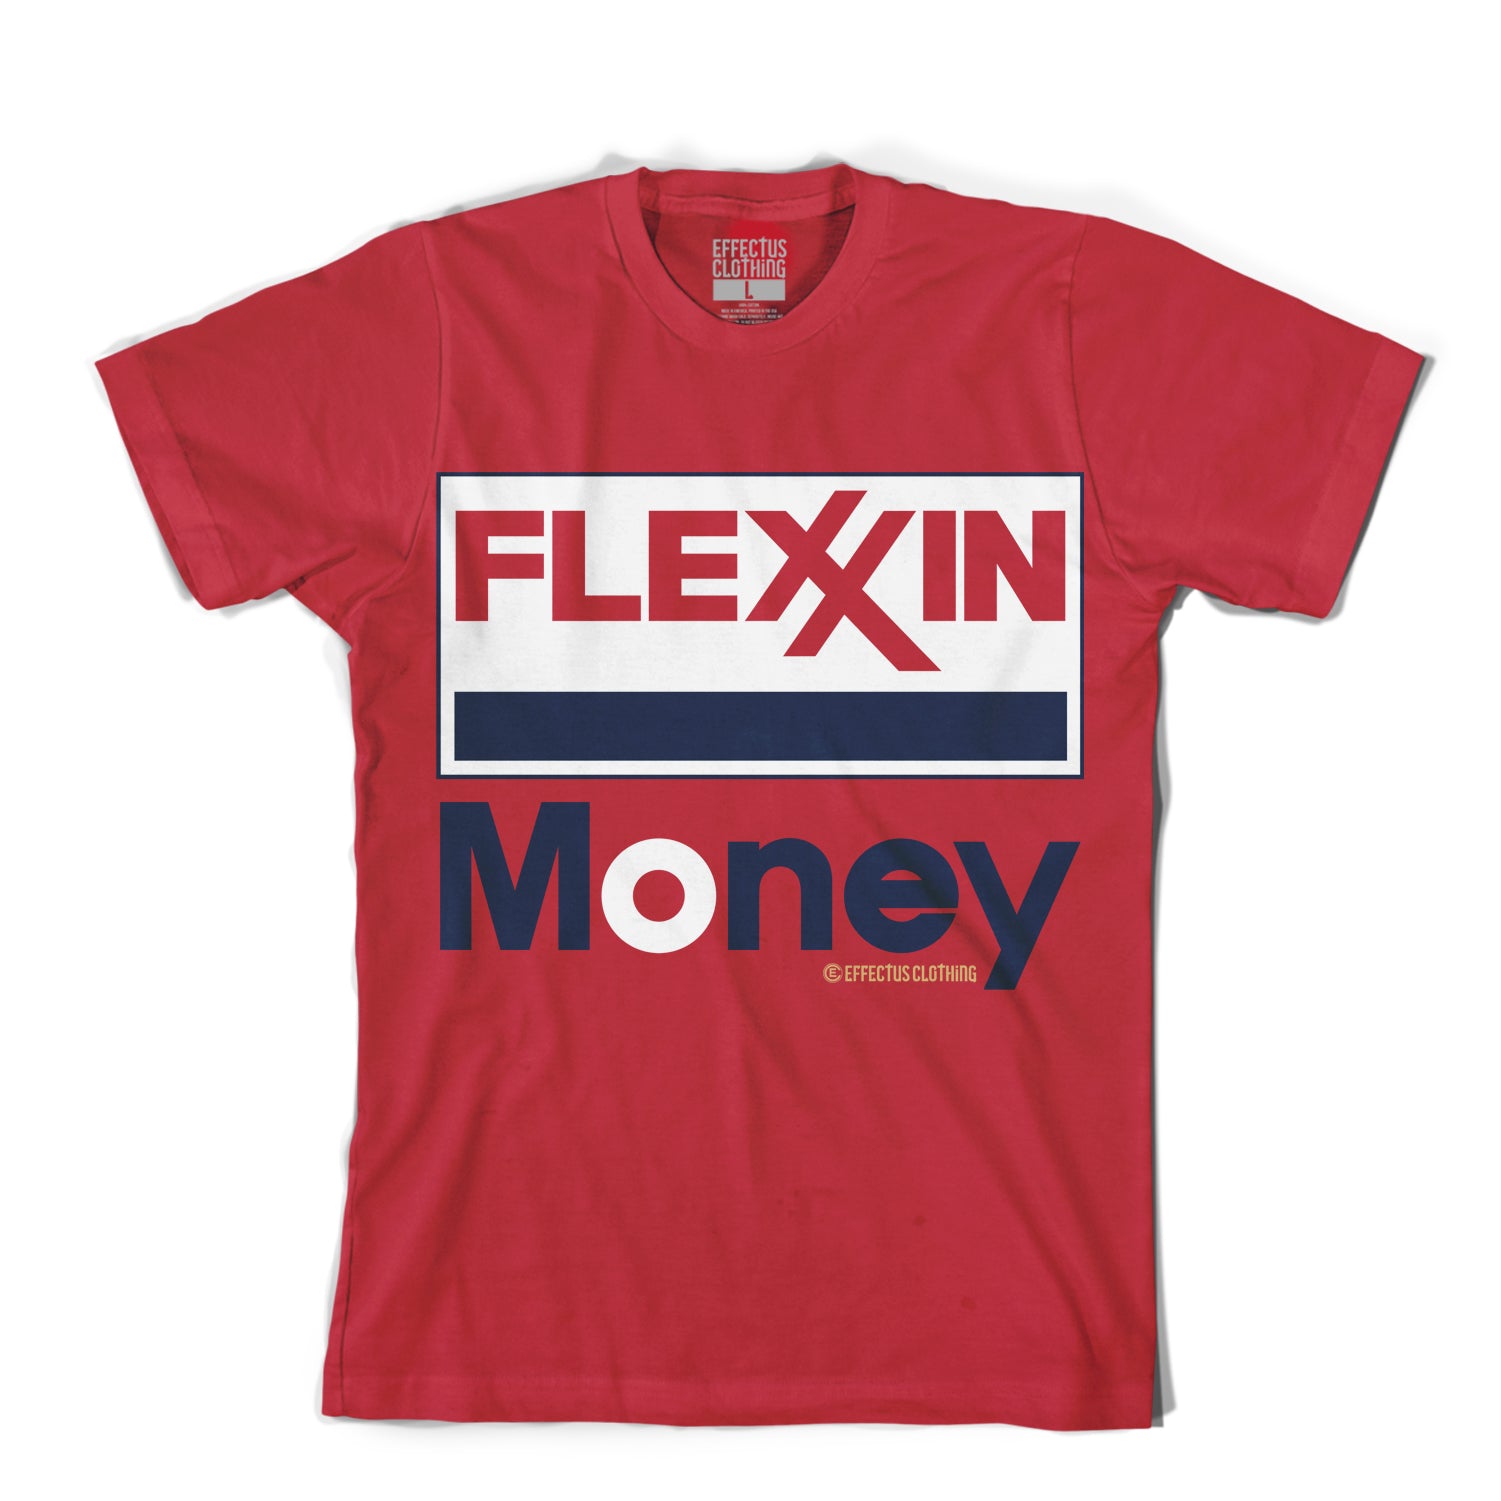 Flexxin Money